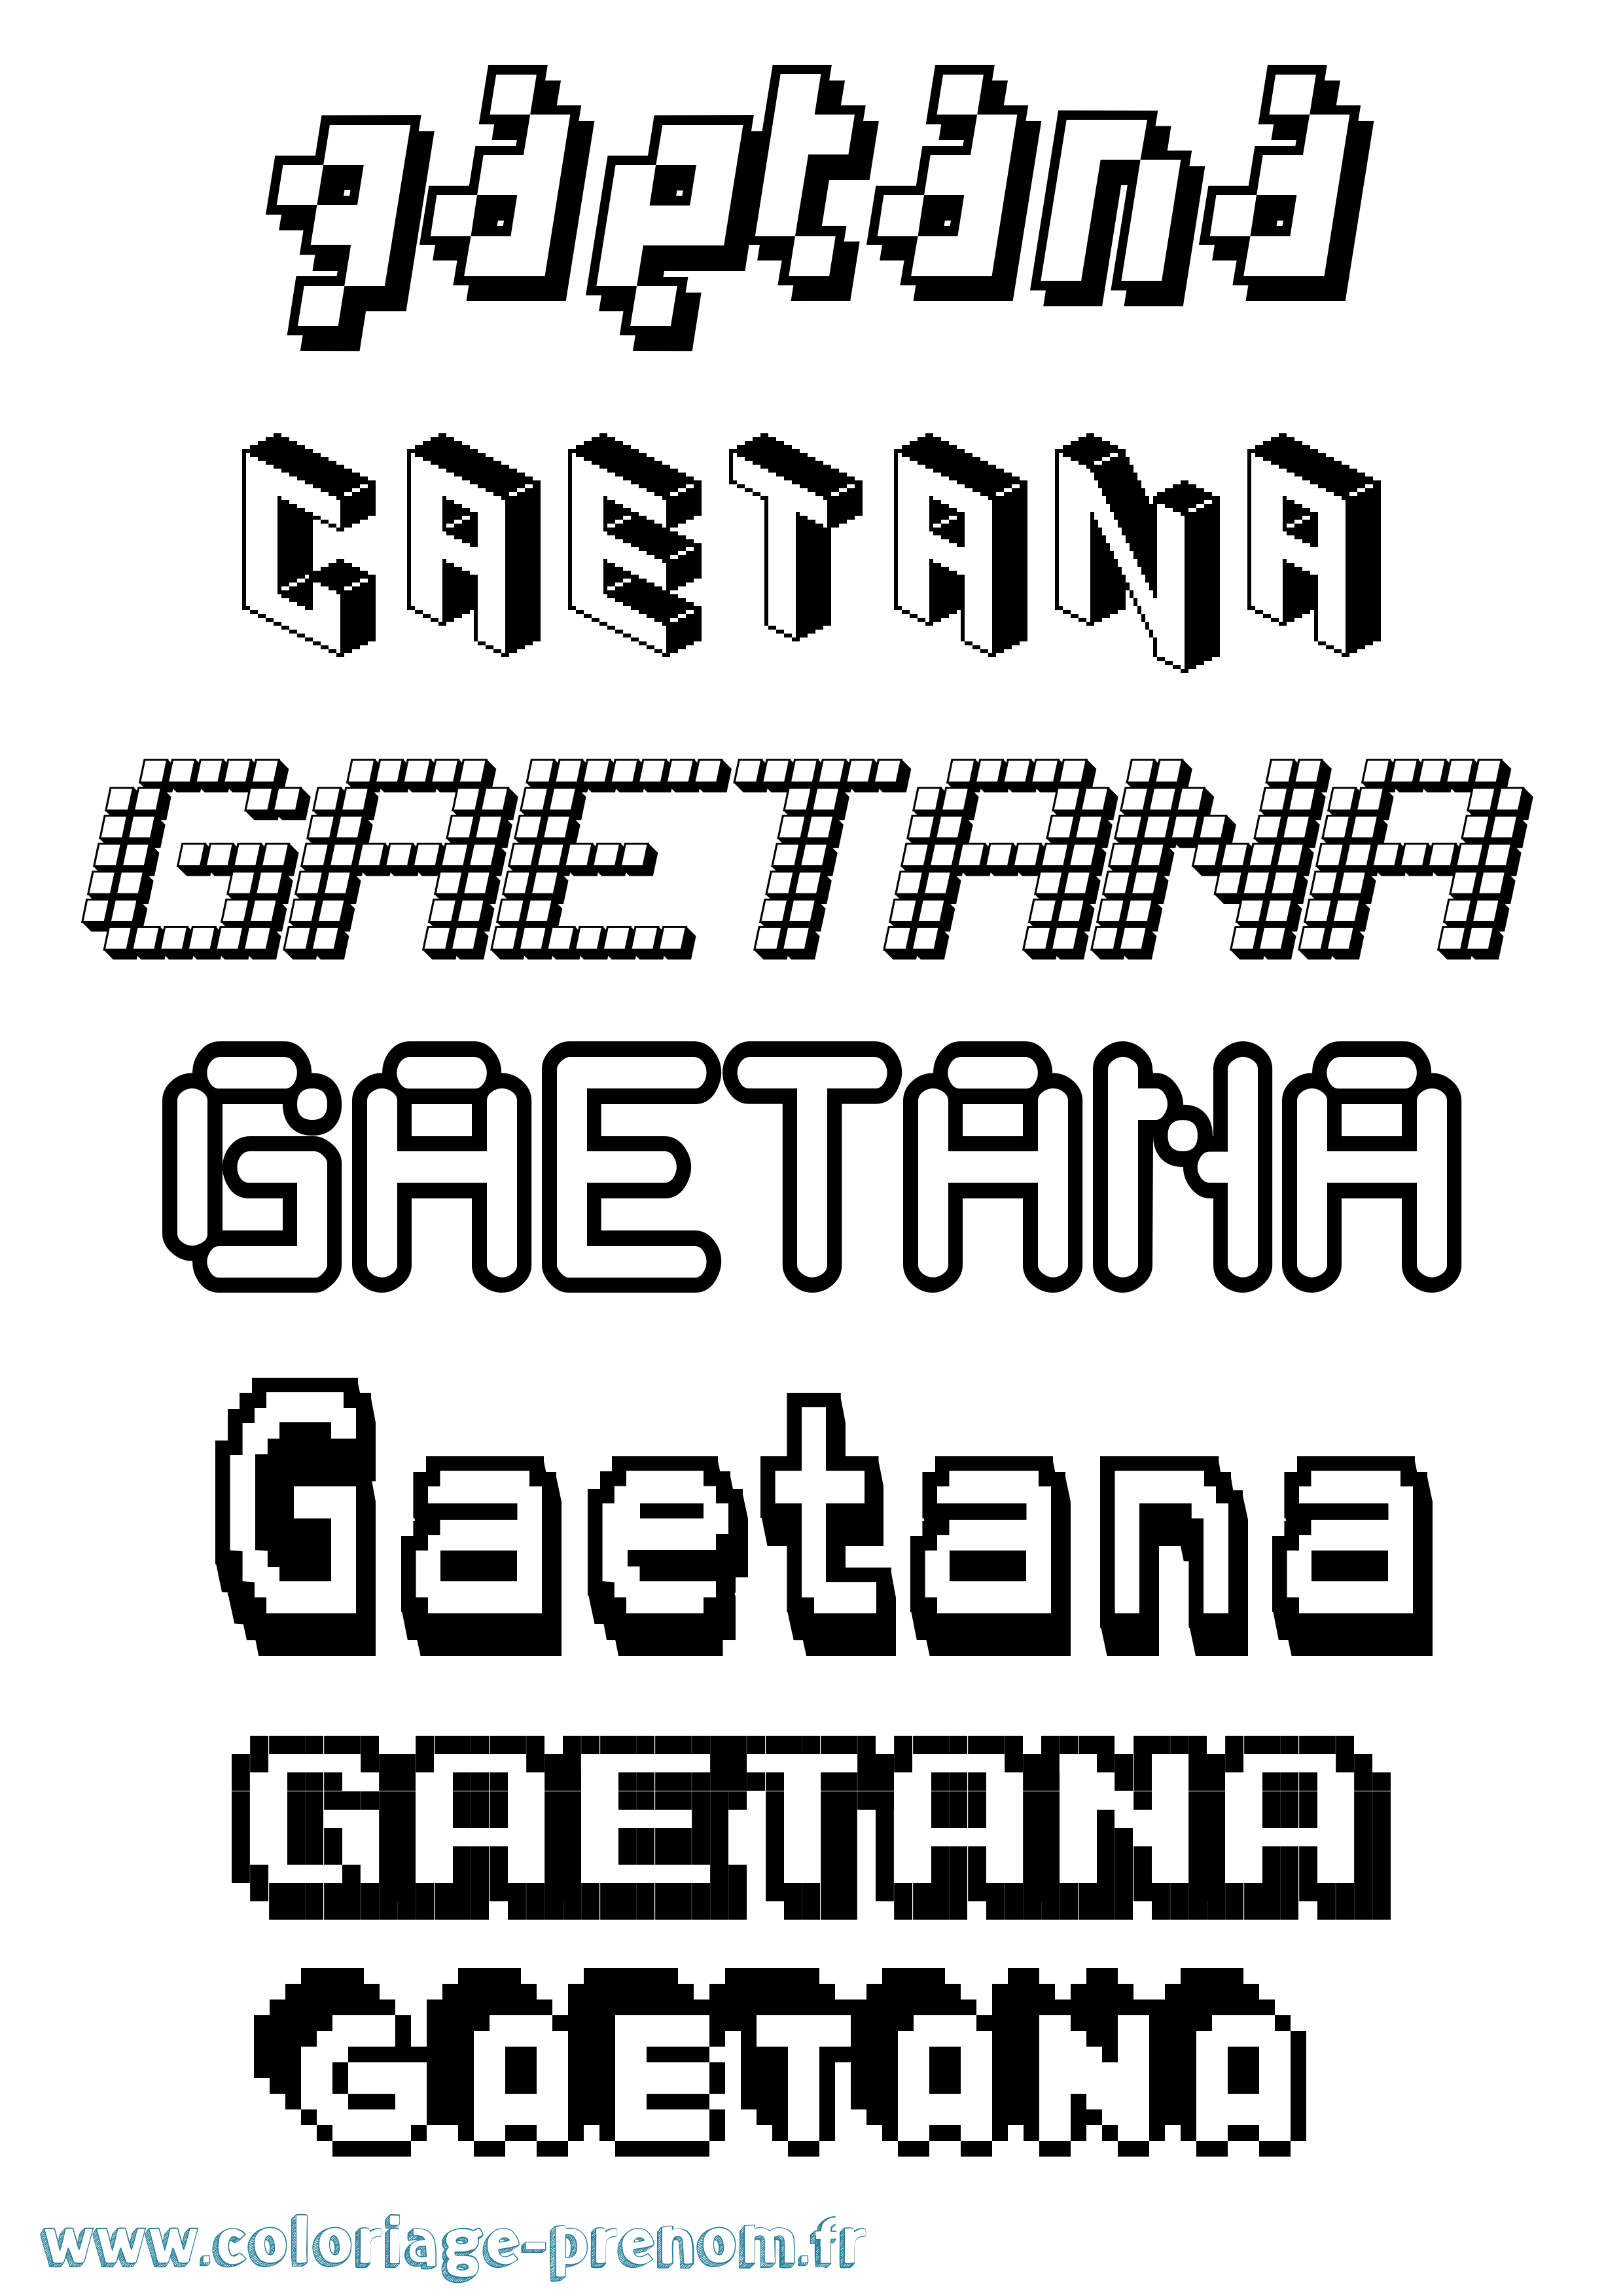 Coloriage prénom Gaetana Pixel